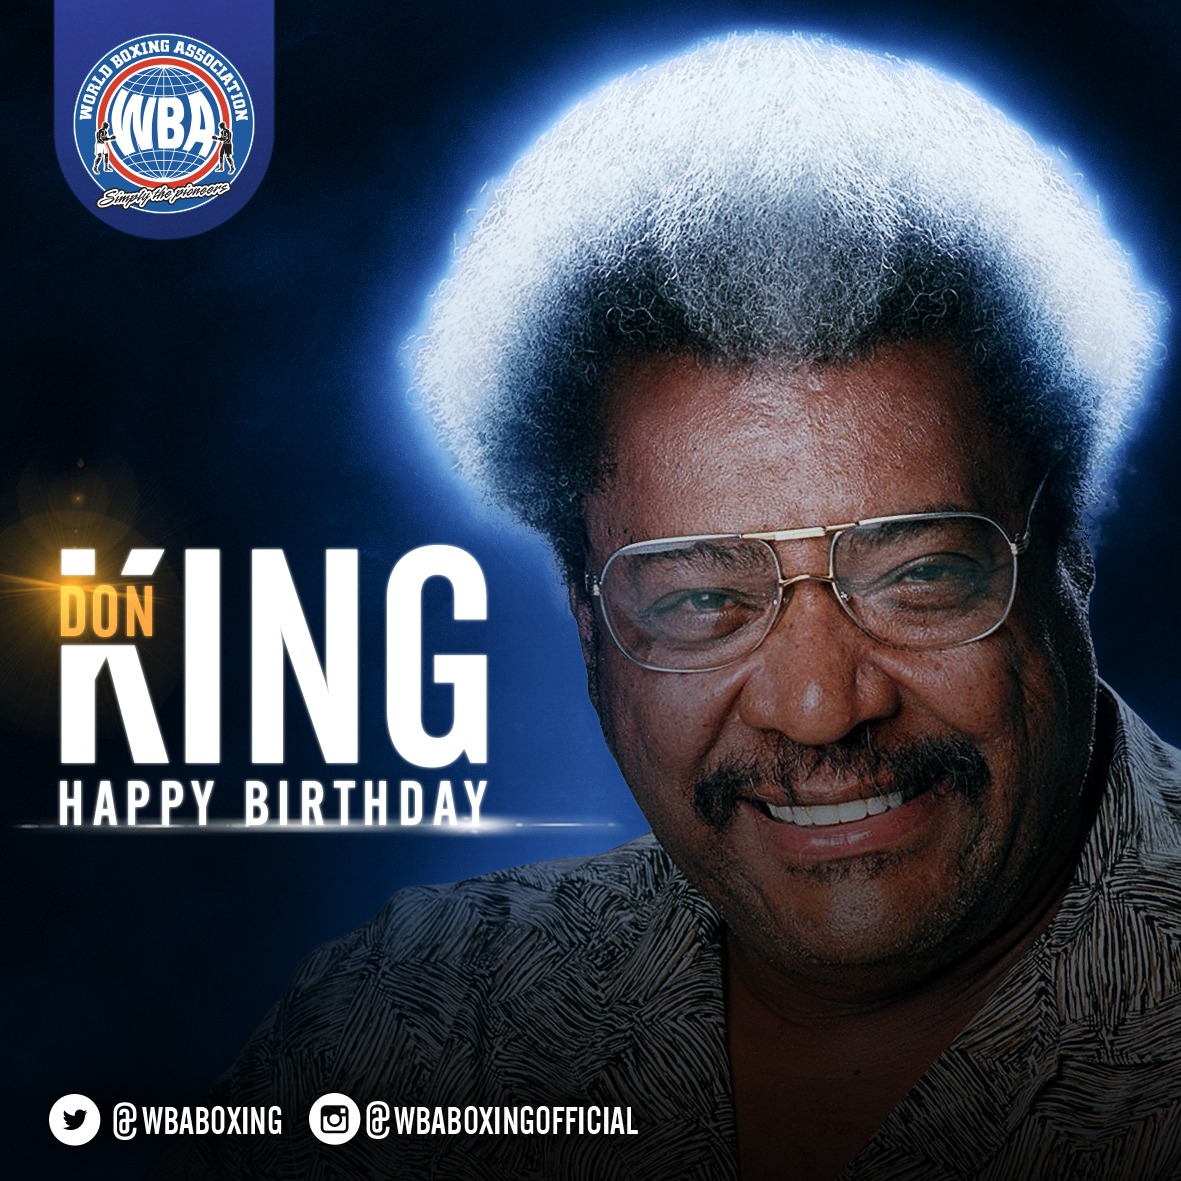 Happy Birthday to Don King